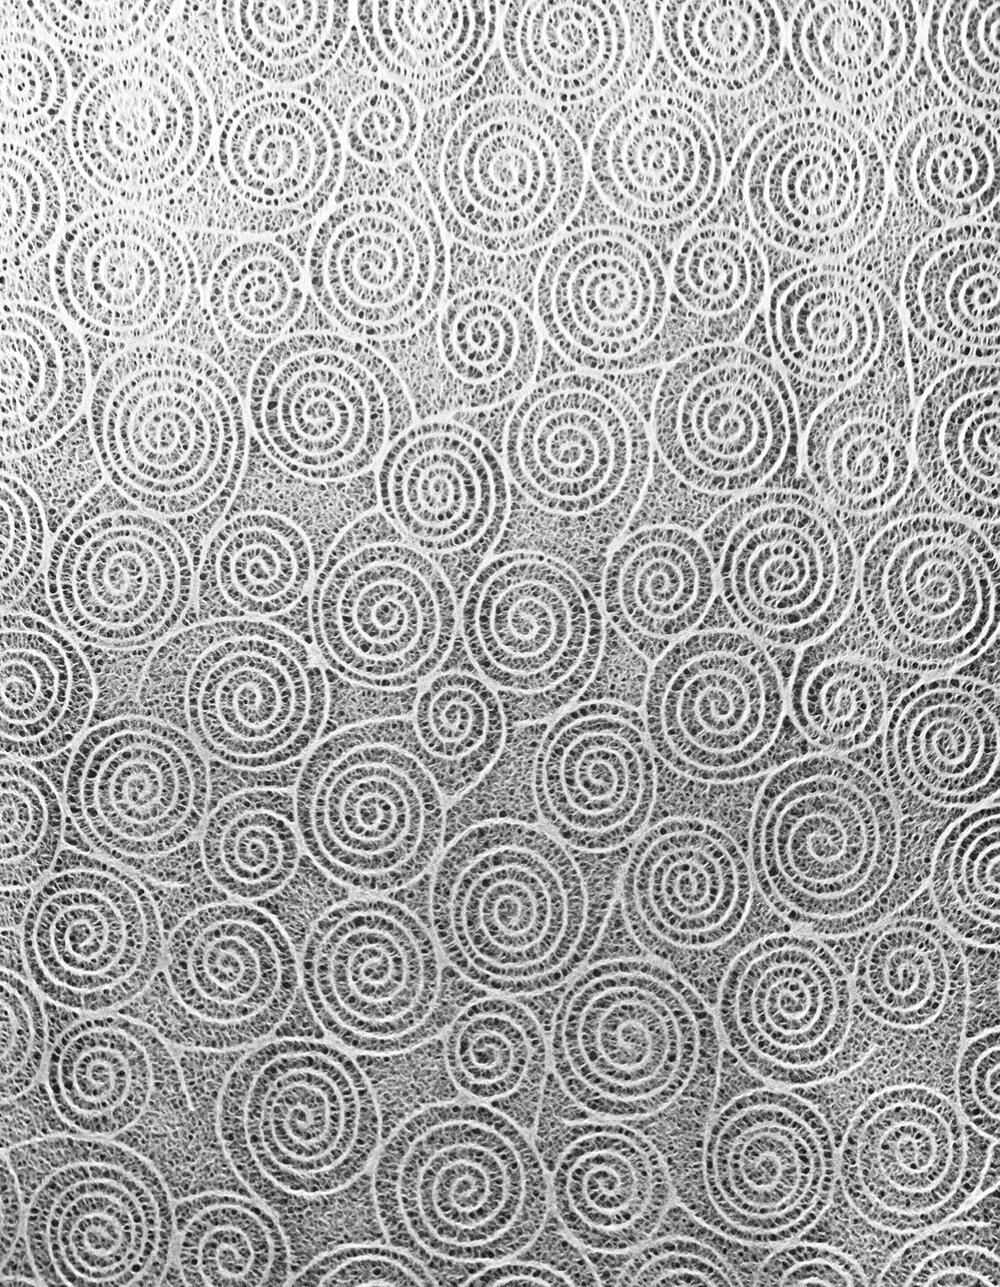 Black Swirl Pattern Washi